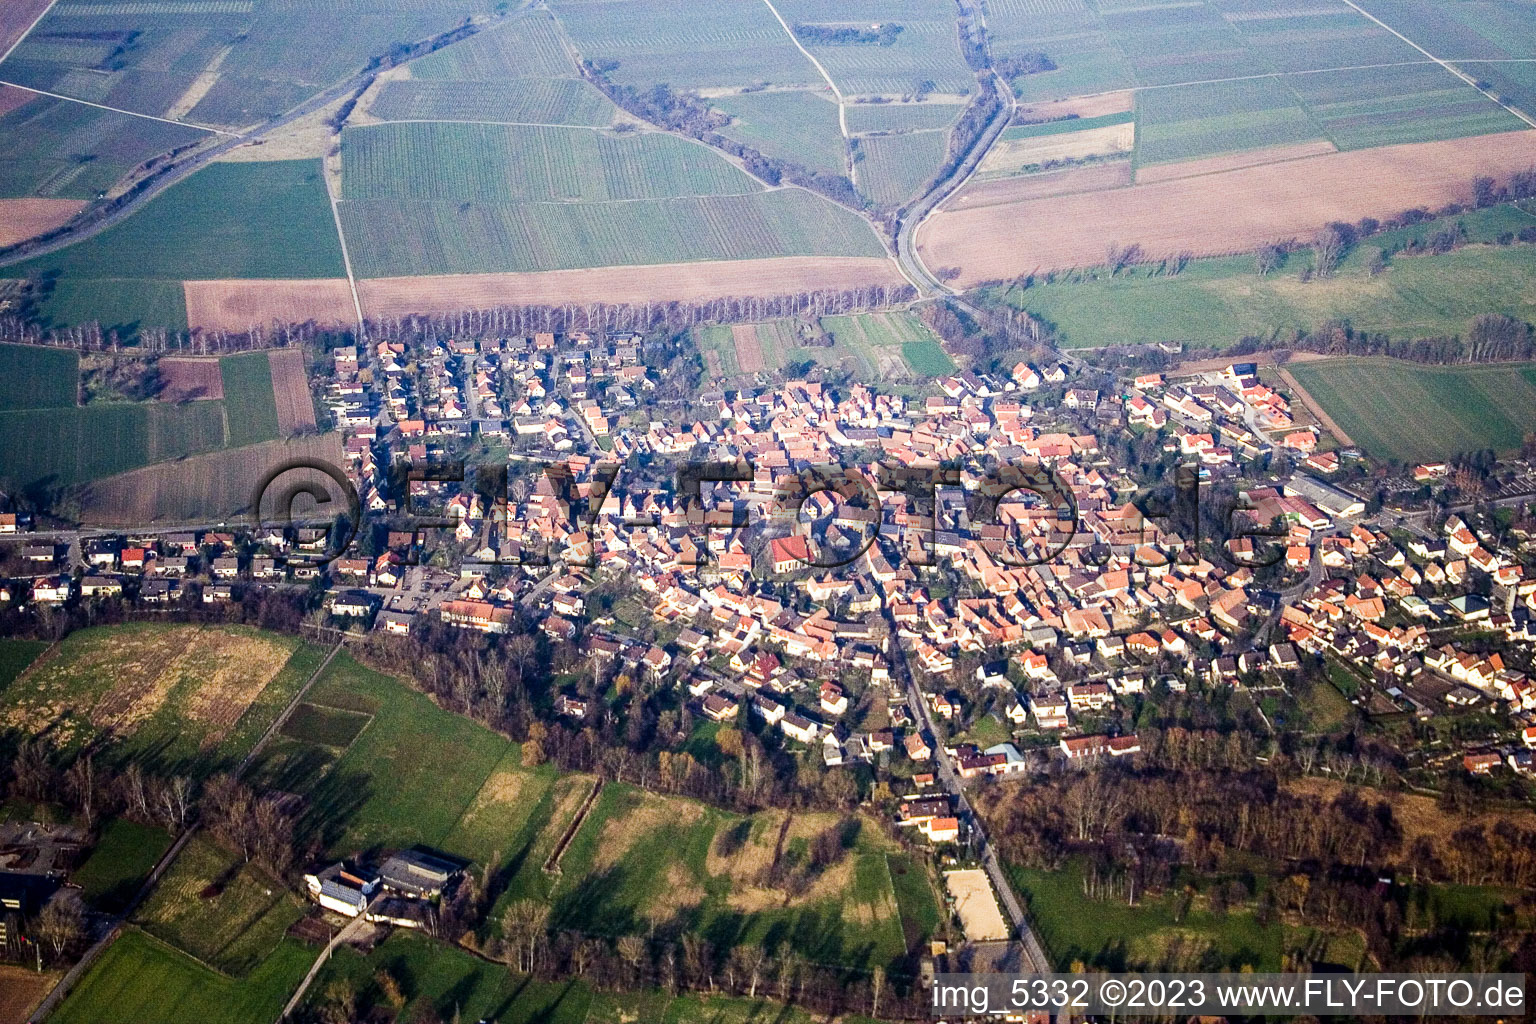 District Billigheim in Billigheim-Ingenheim in the state Rhineland-Palatinate, Germany from a drone